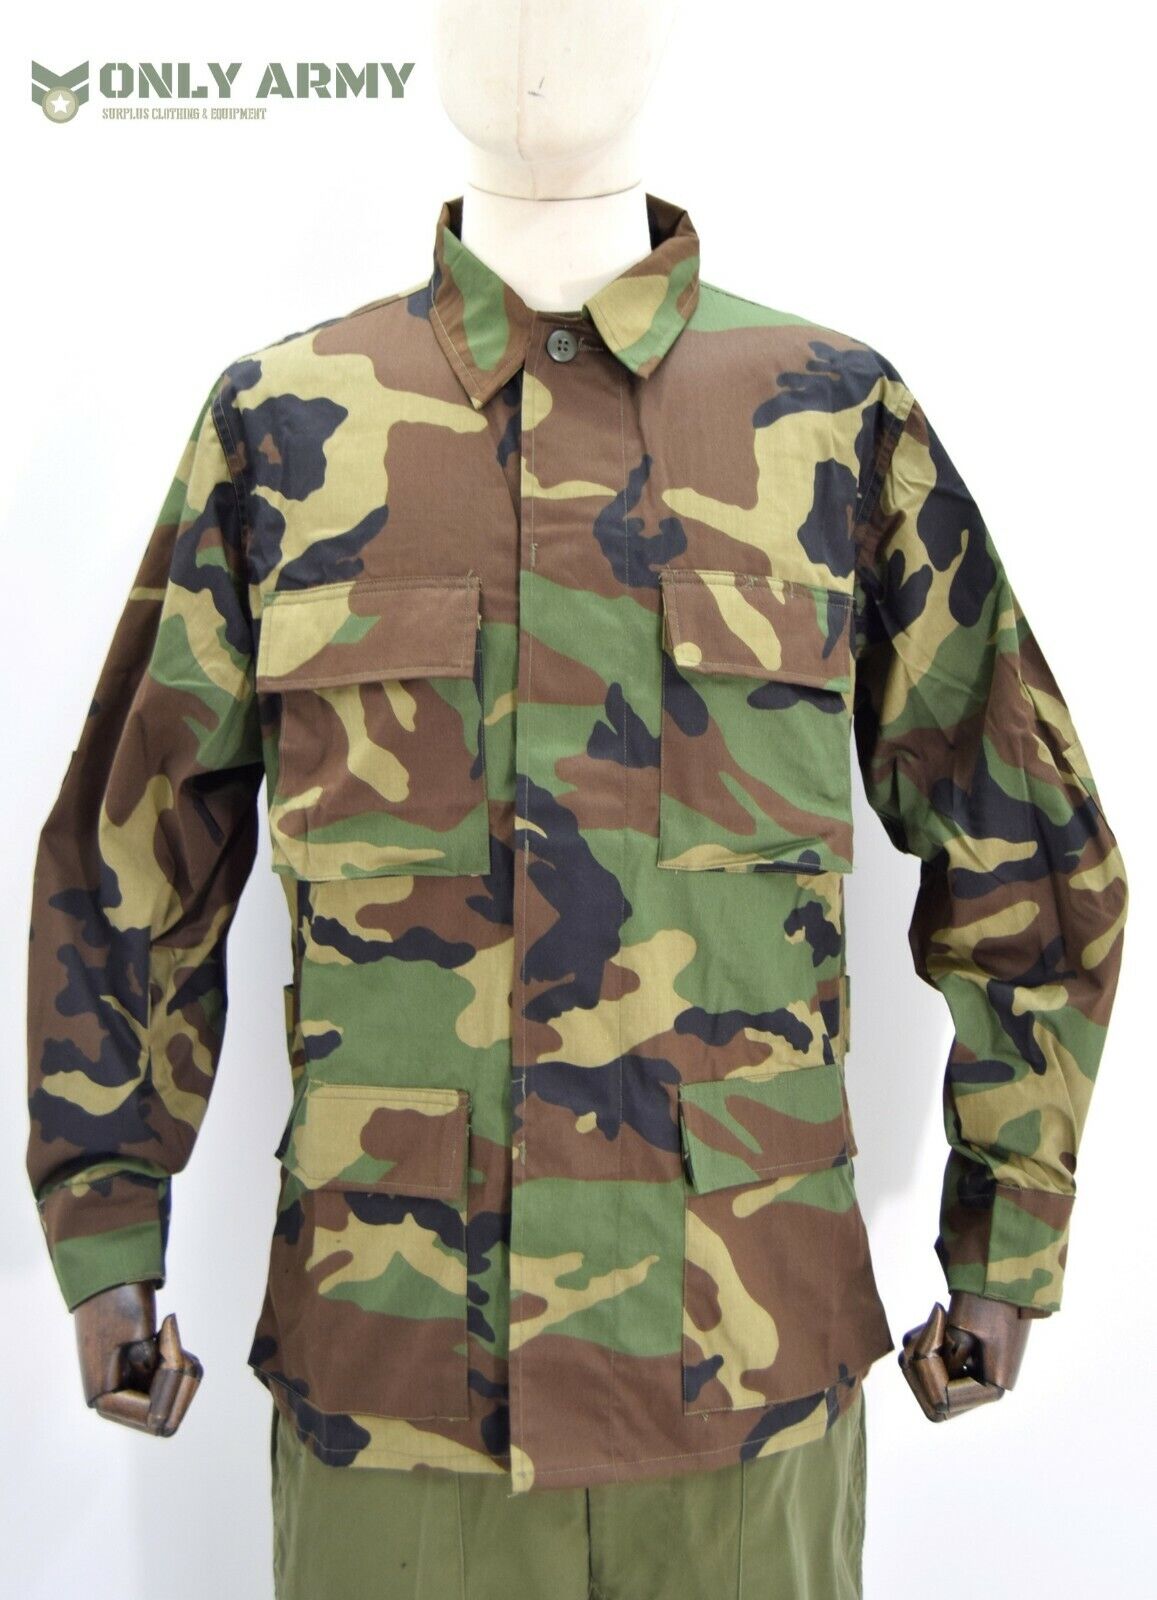 3 x New USGI Army Underwear US Military Briefs Cotton Stretch